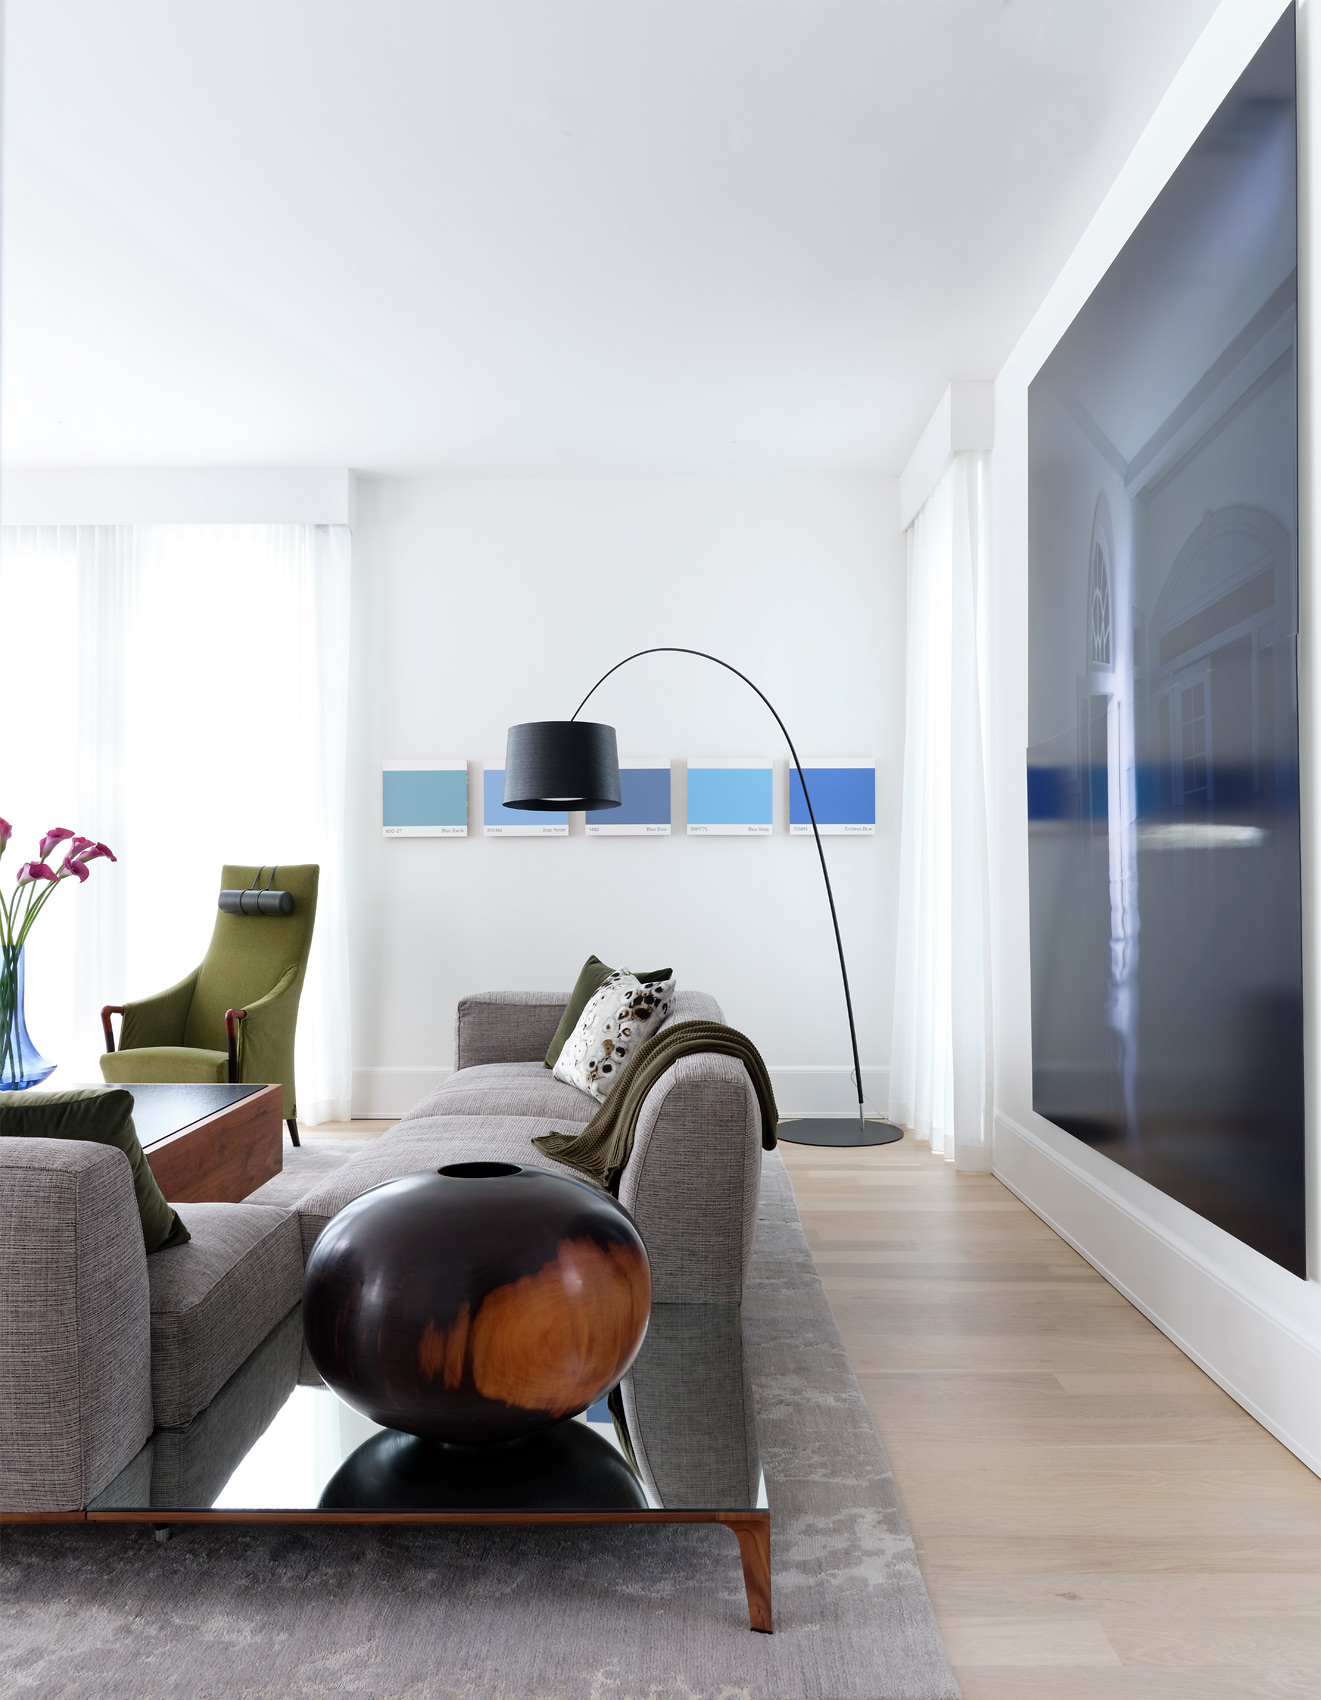 Julie Witzel designed living room photographed by Mali Azima. 